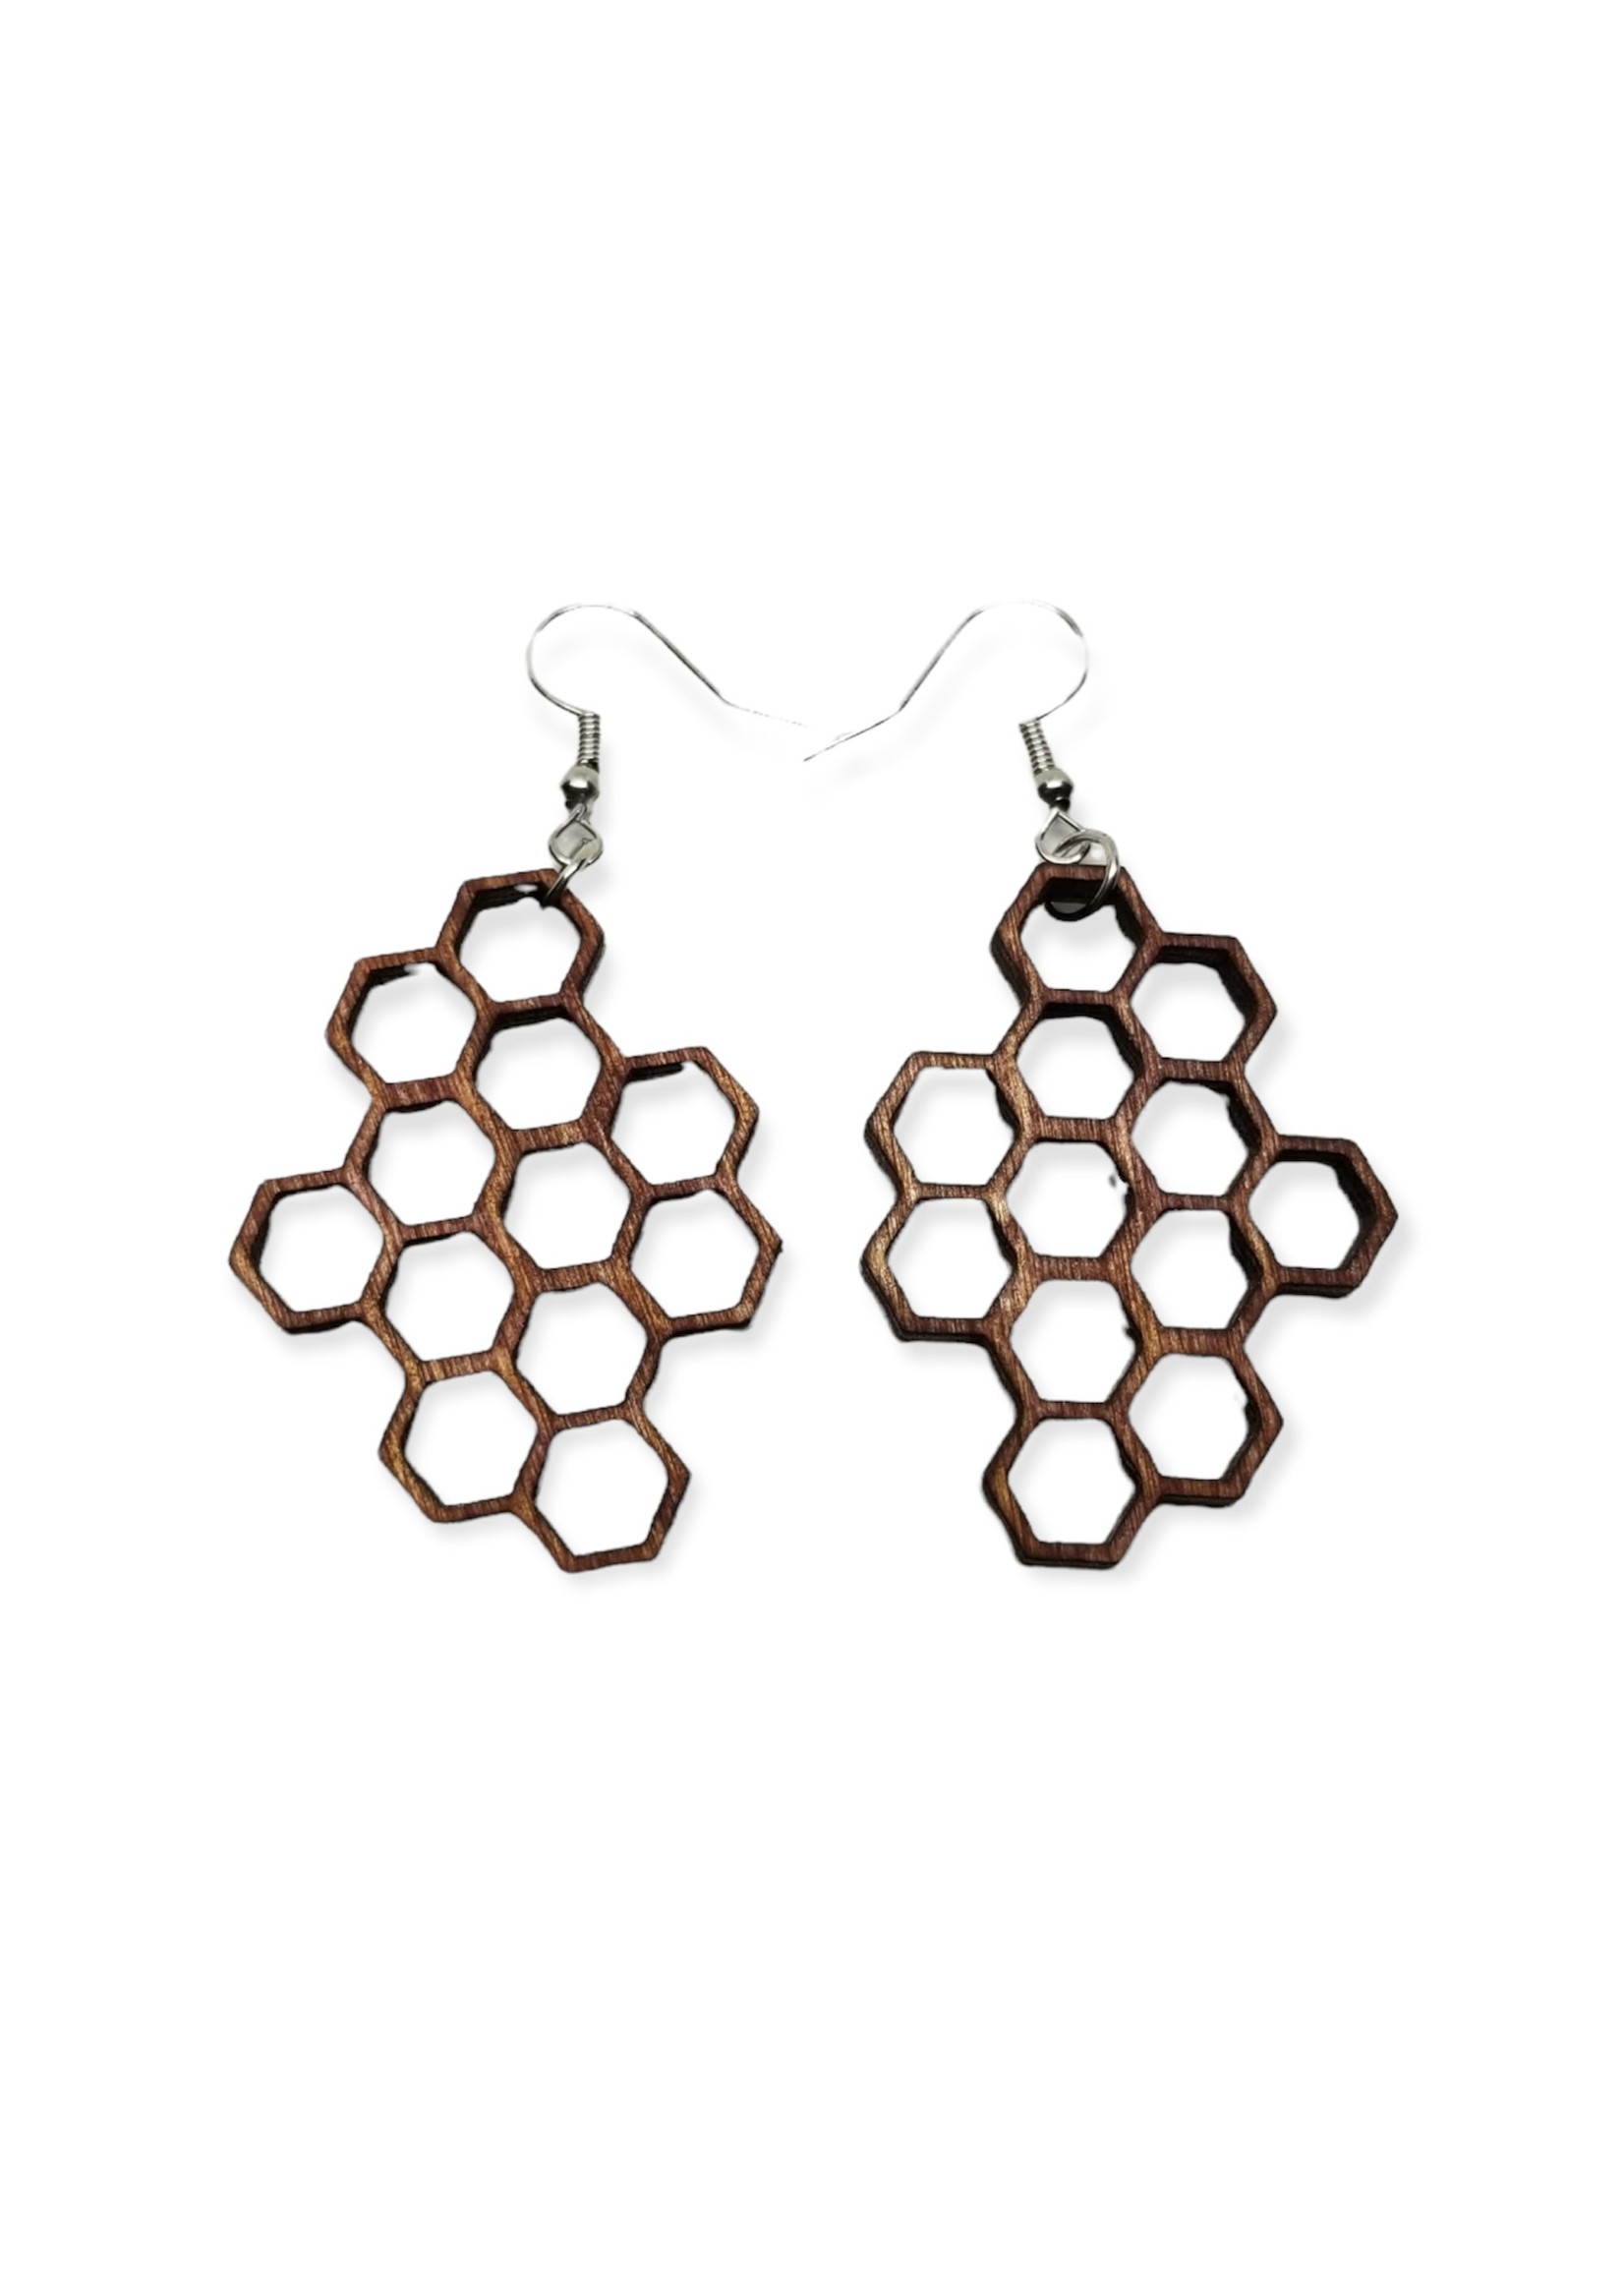 Honeycomb Earrings (WL)